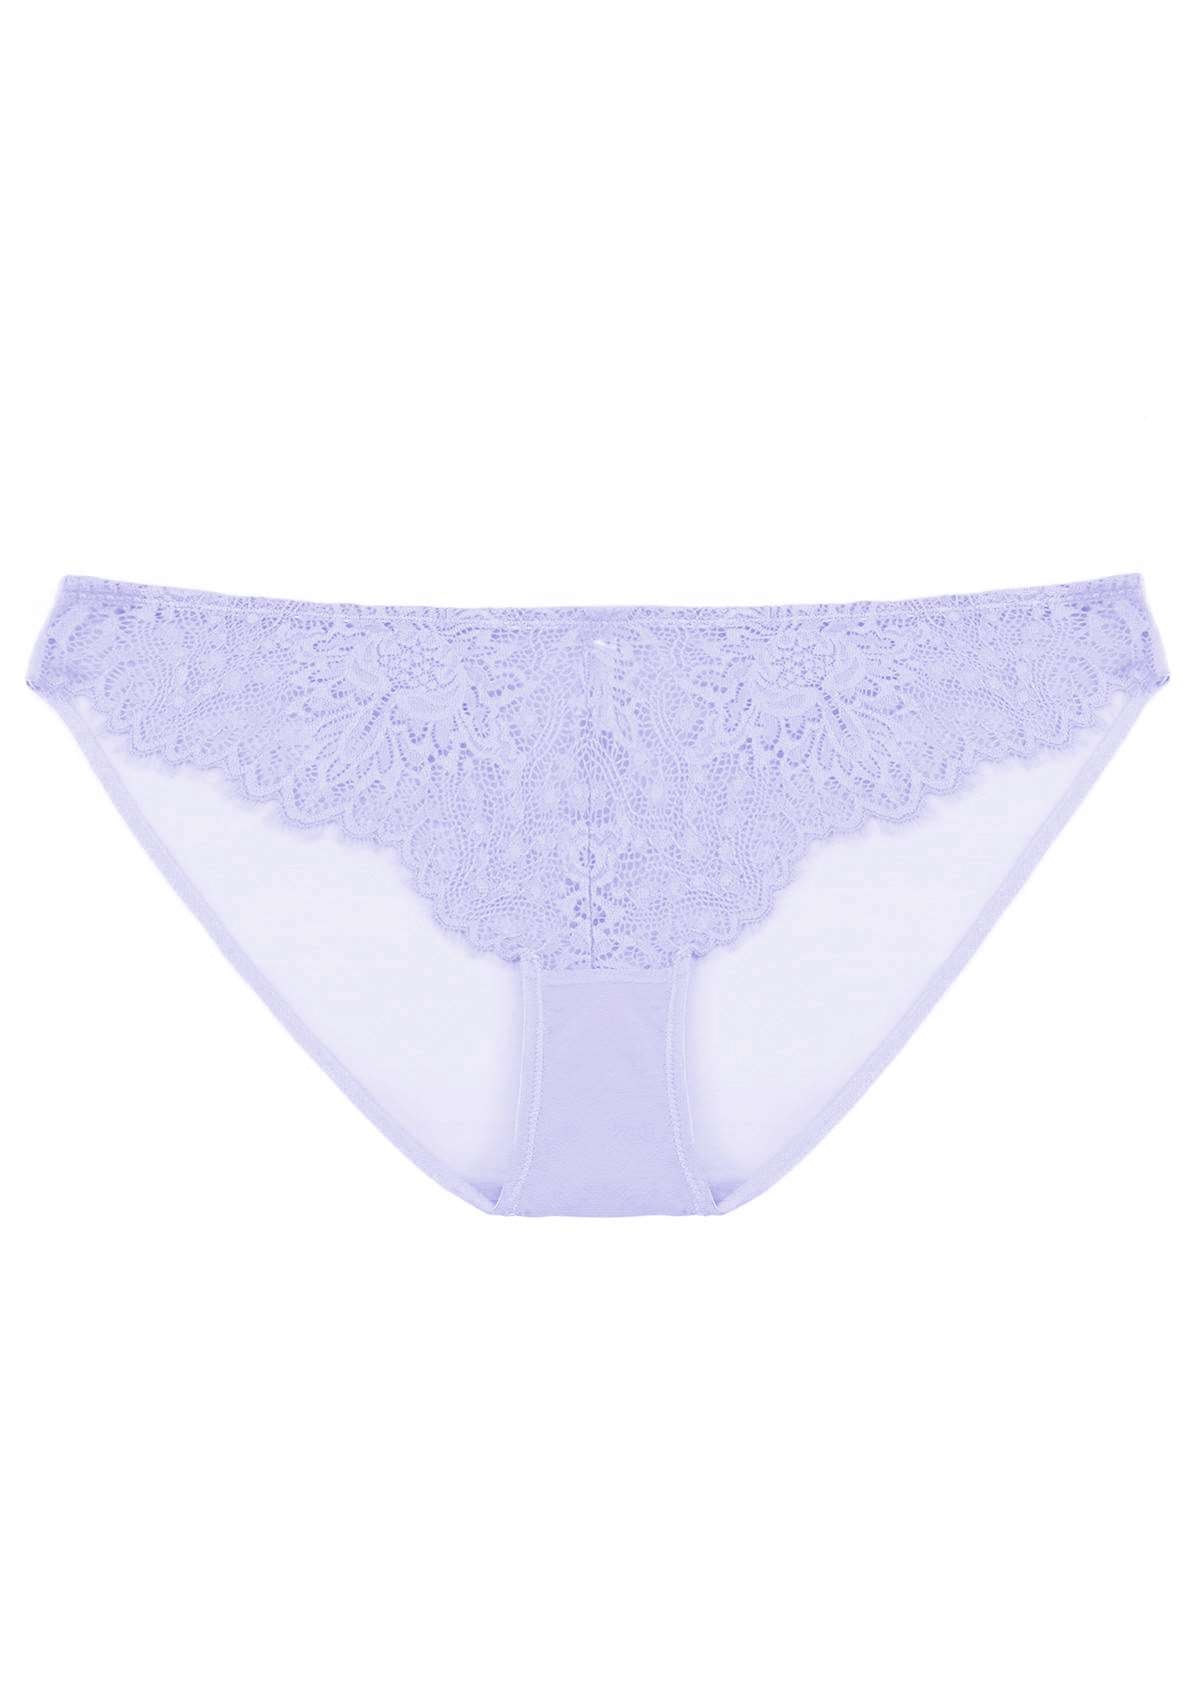 HSIA Sunflower Exquisite Lace Bikini Underwear - XL / Purple